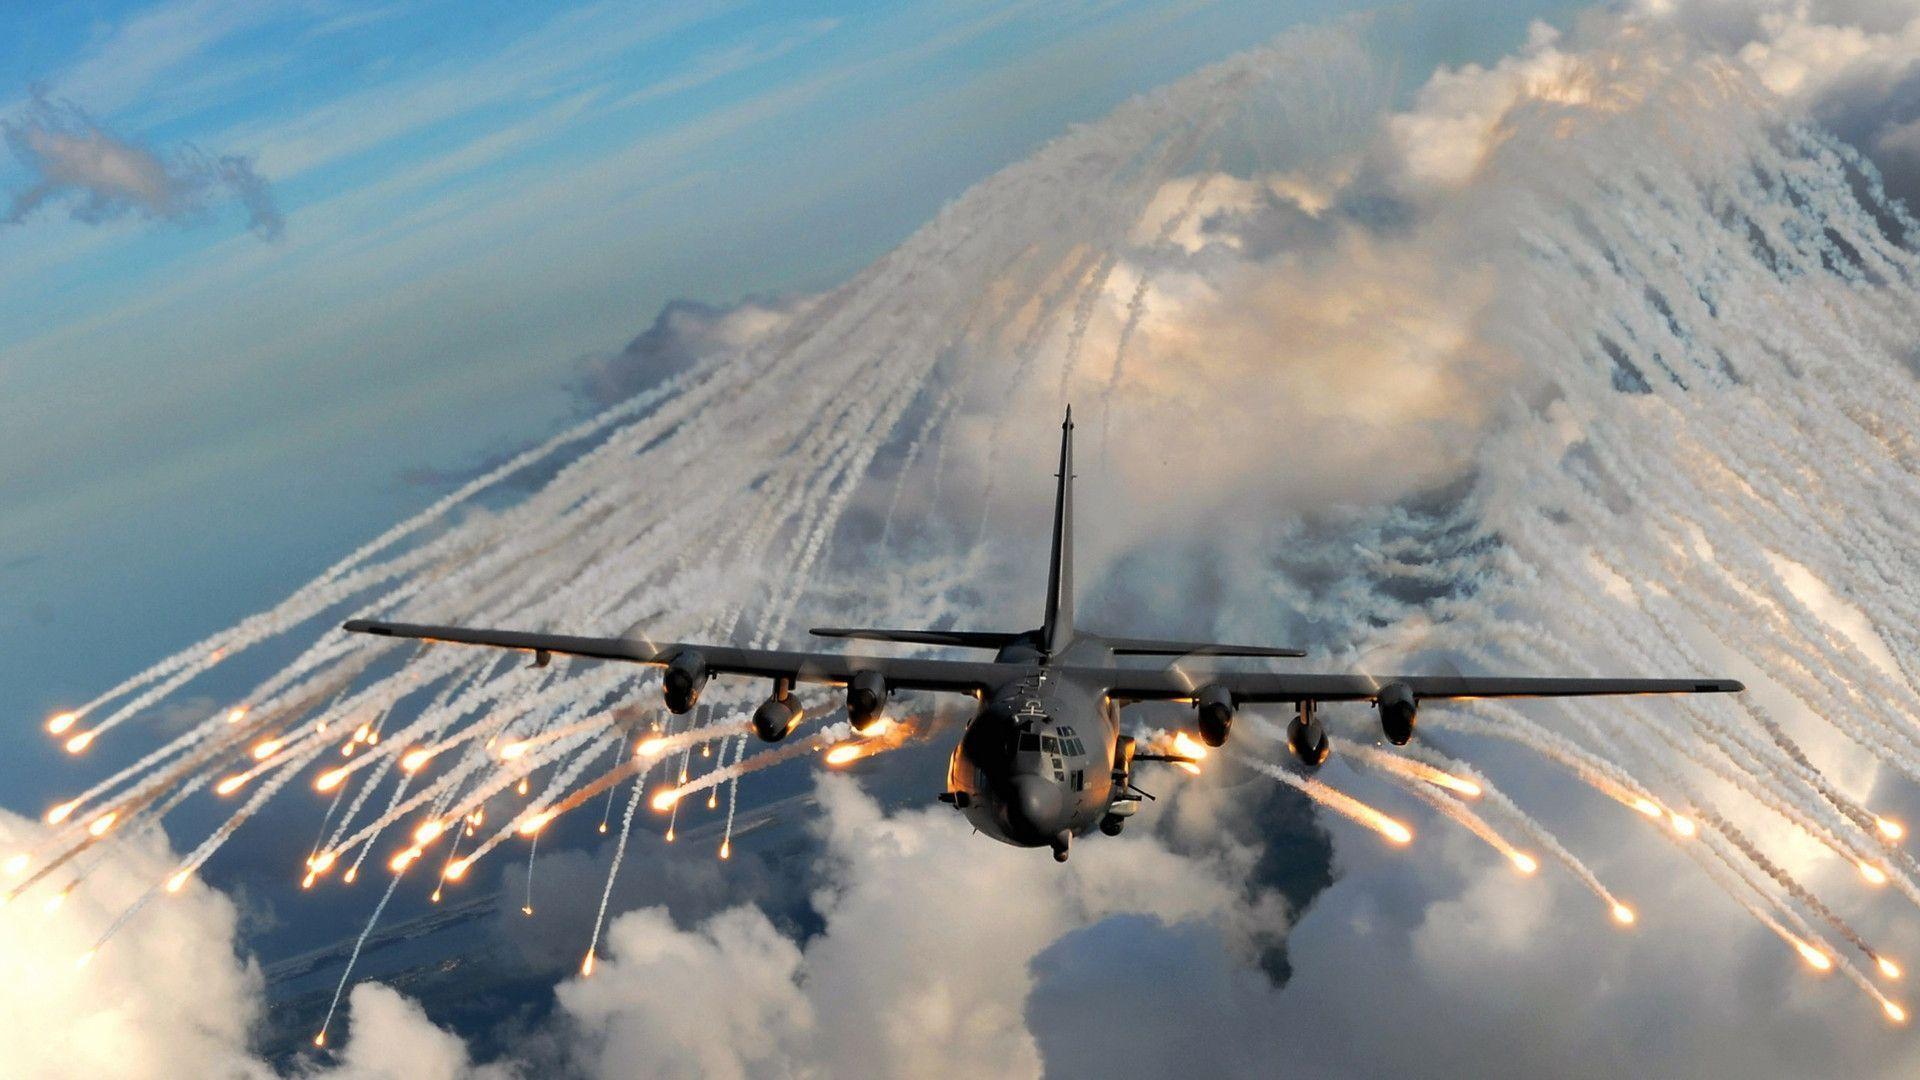 Pin Free Lockheed Ac 130 Shooting Flares Wallpaper For iPad 2